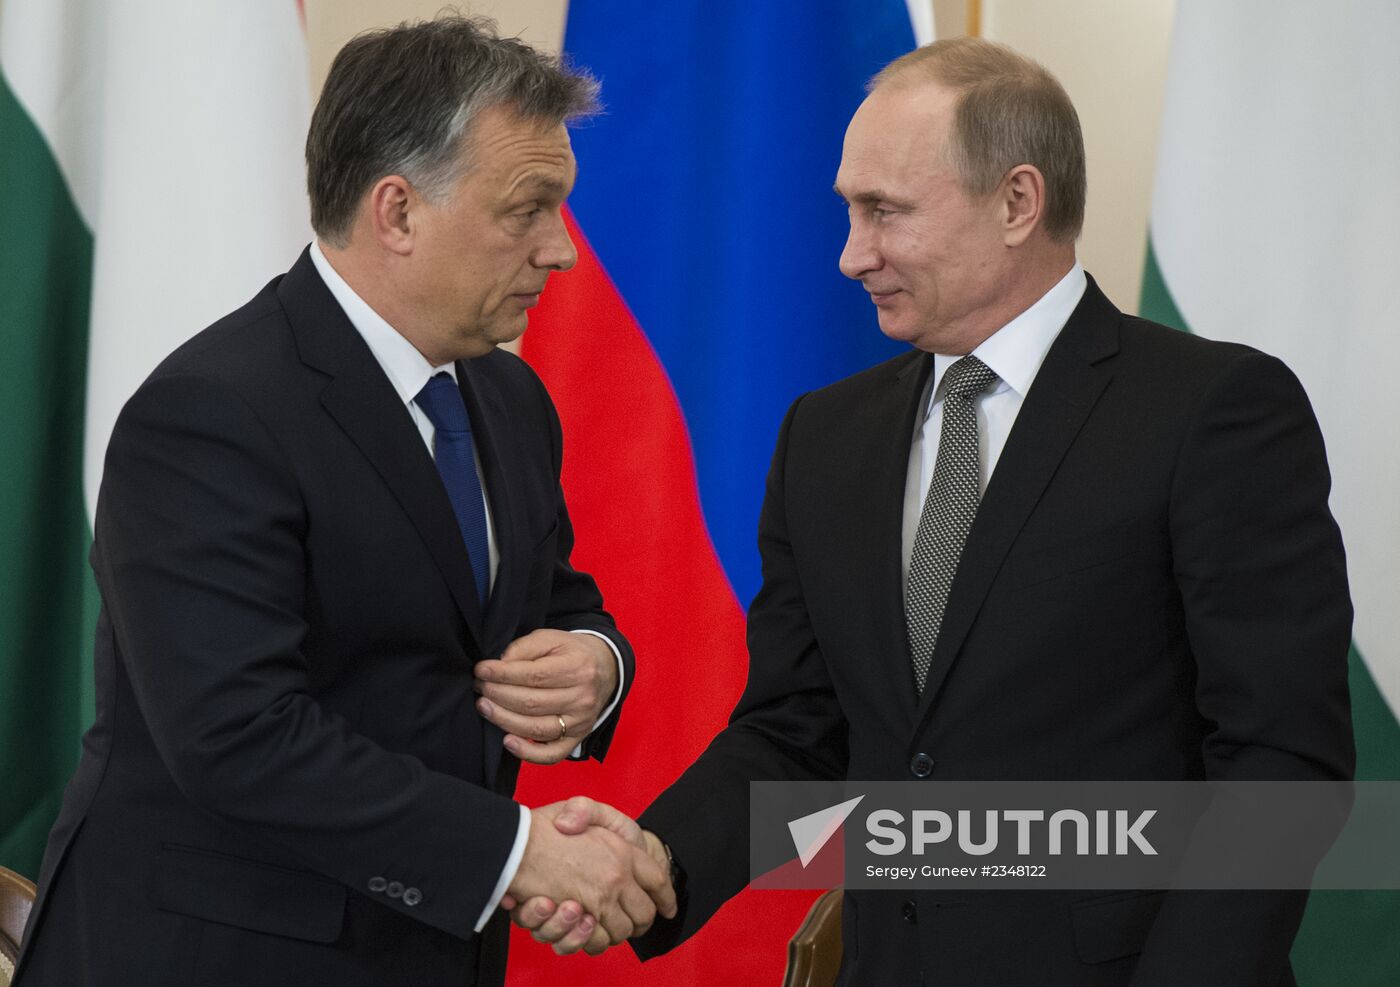 Vladimir Putin meets with Viktor Orban